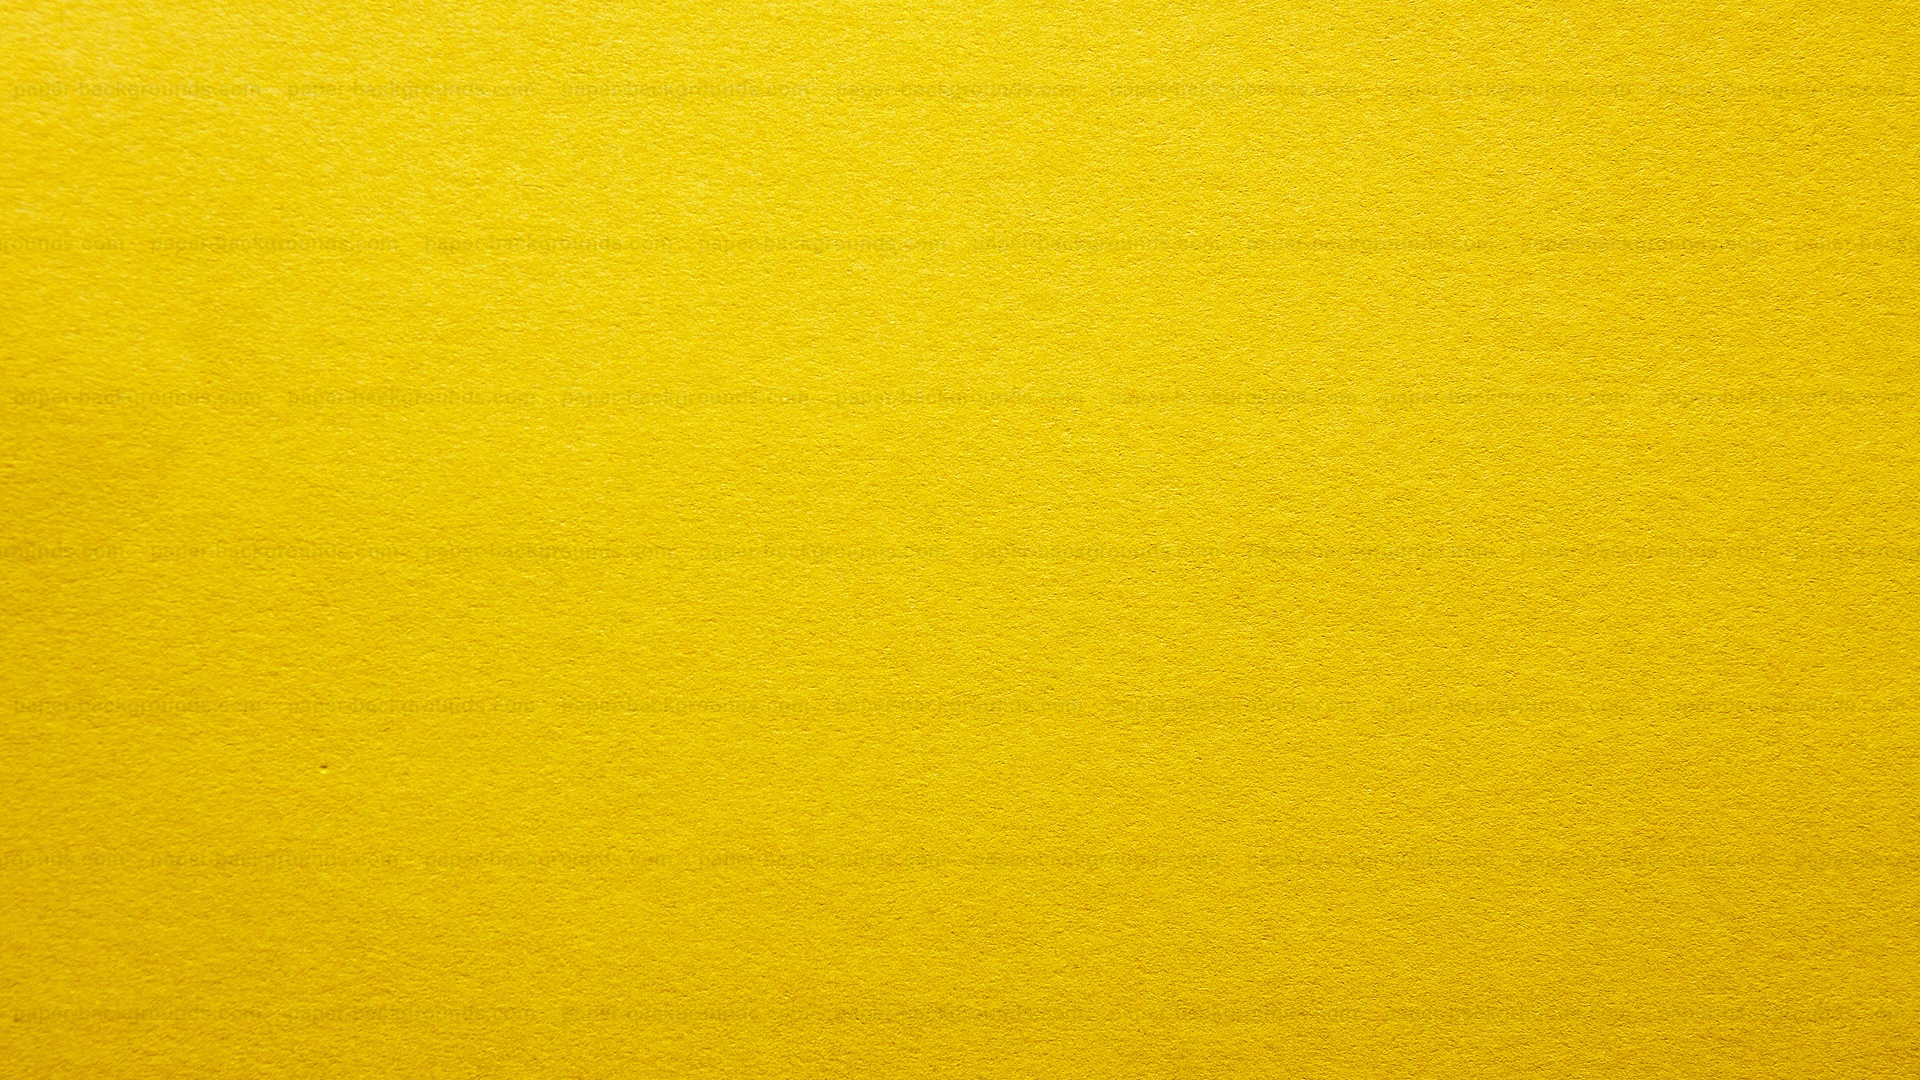 Download Yellow Background Images - WallpaperSafari